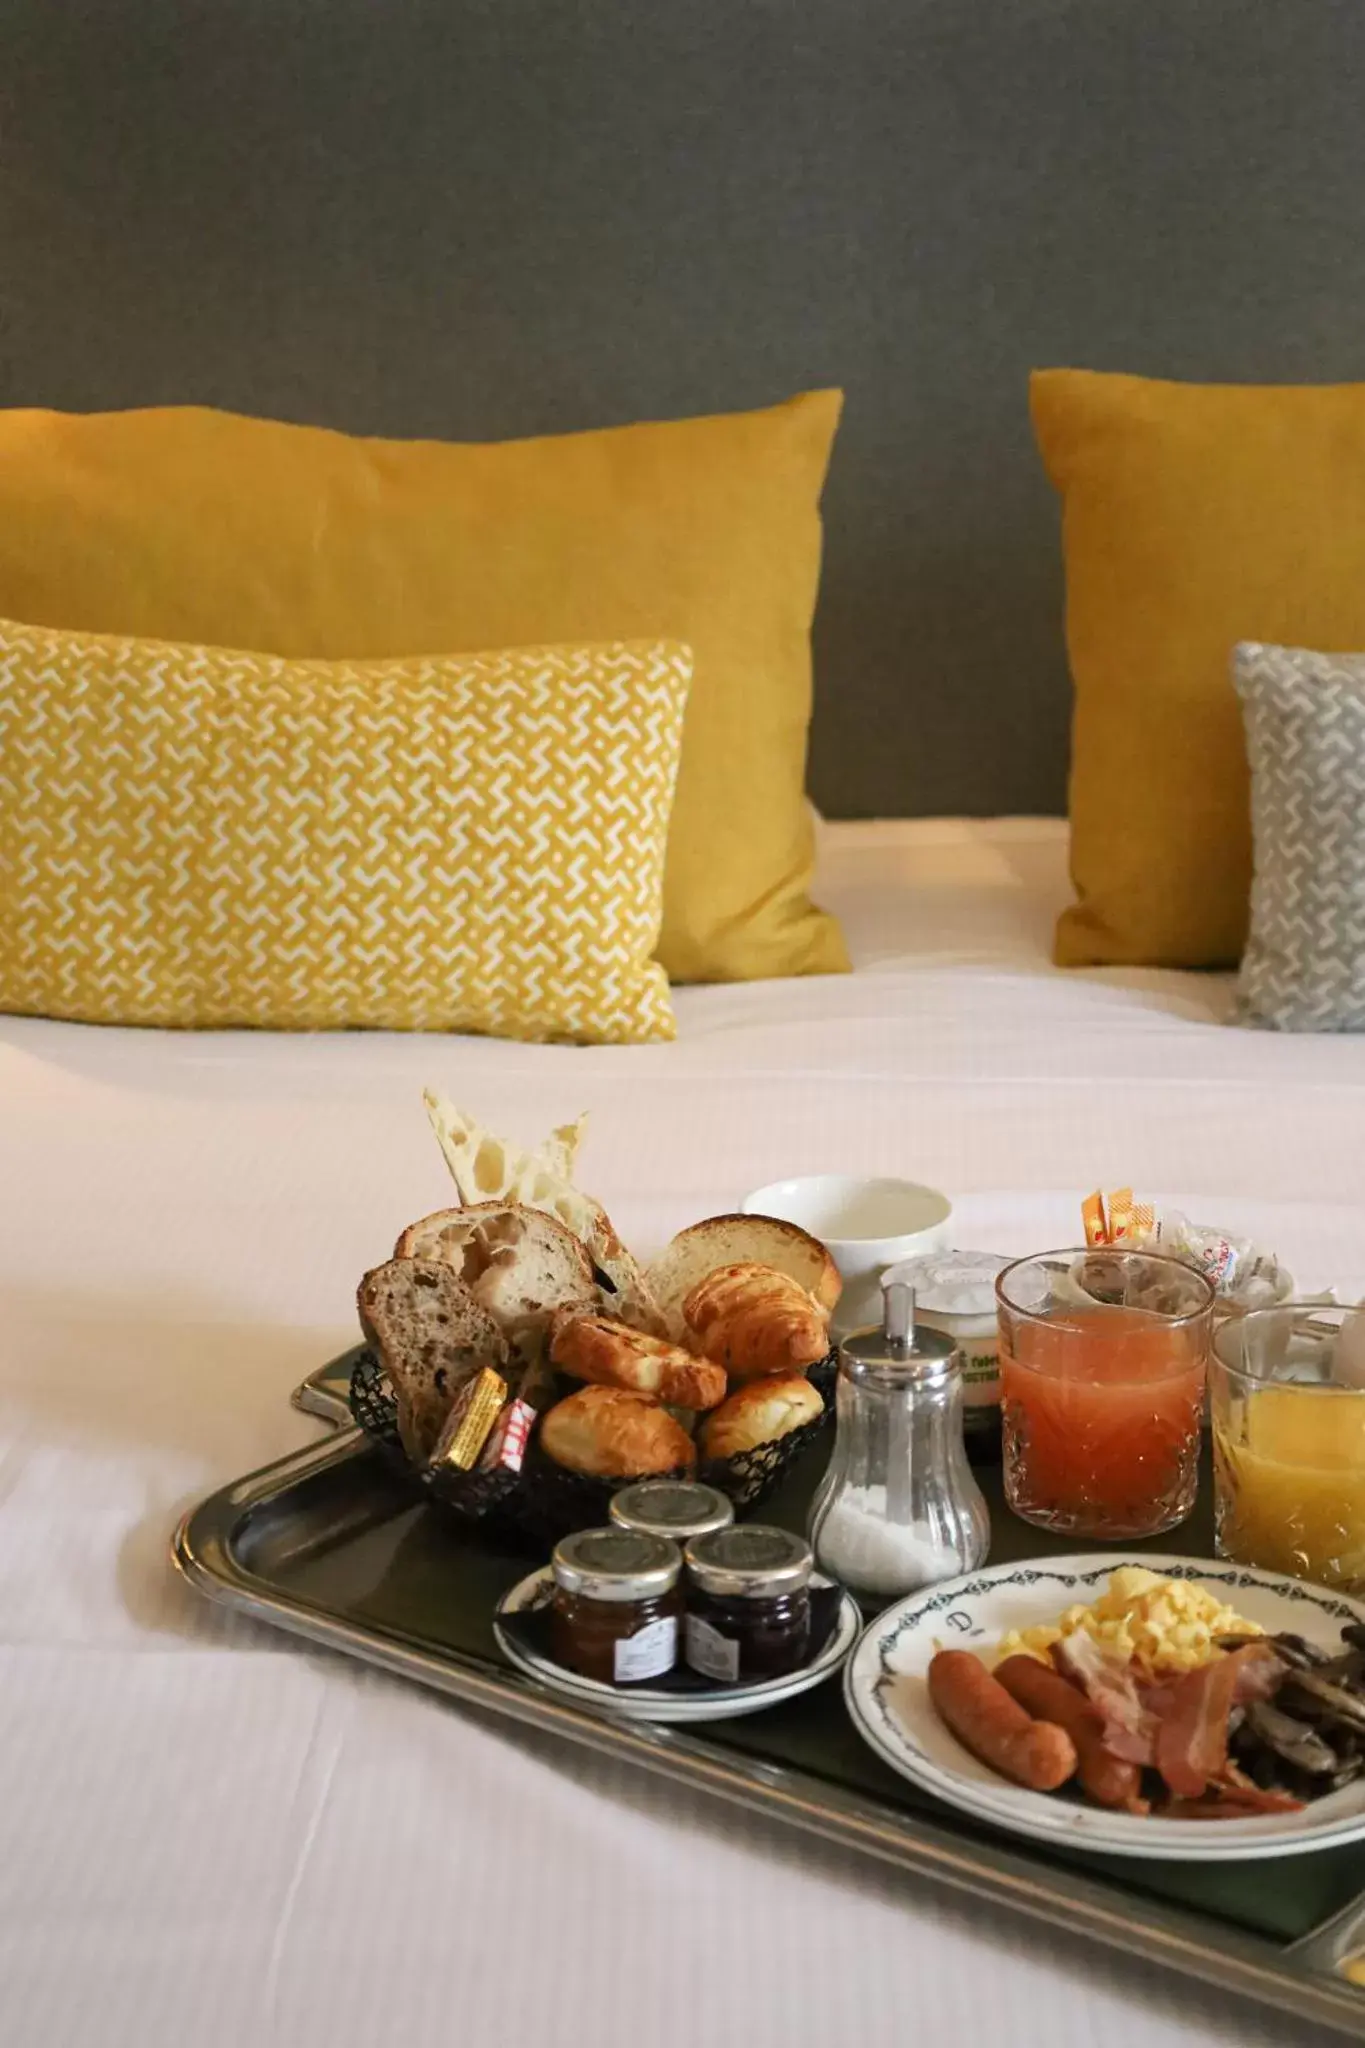 Breakfast, Bed in Best Western Plus Hotel de Dieppe 1880